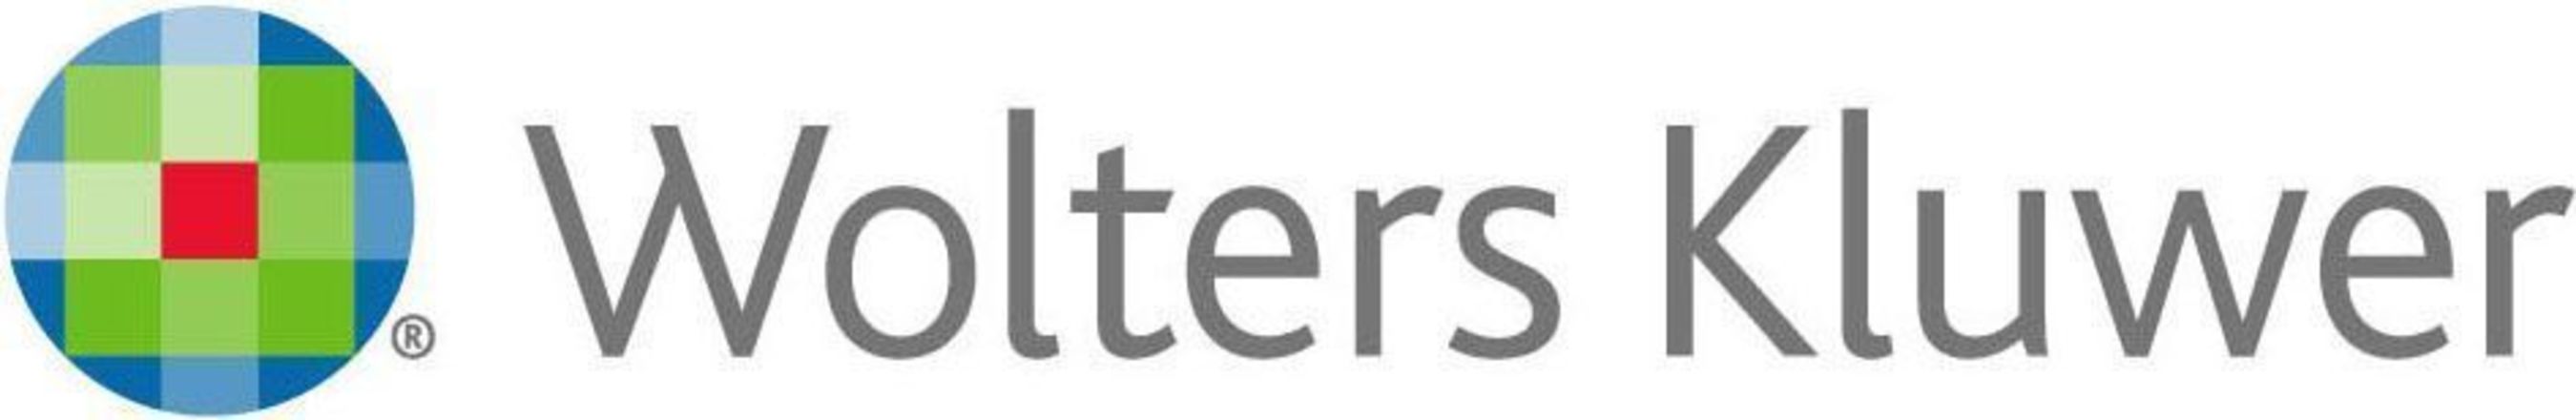 Wolters Kluwer Logo (PRNewsFoto/Wolters Kluwer)